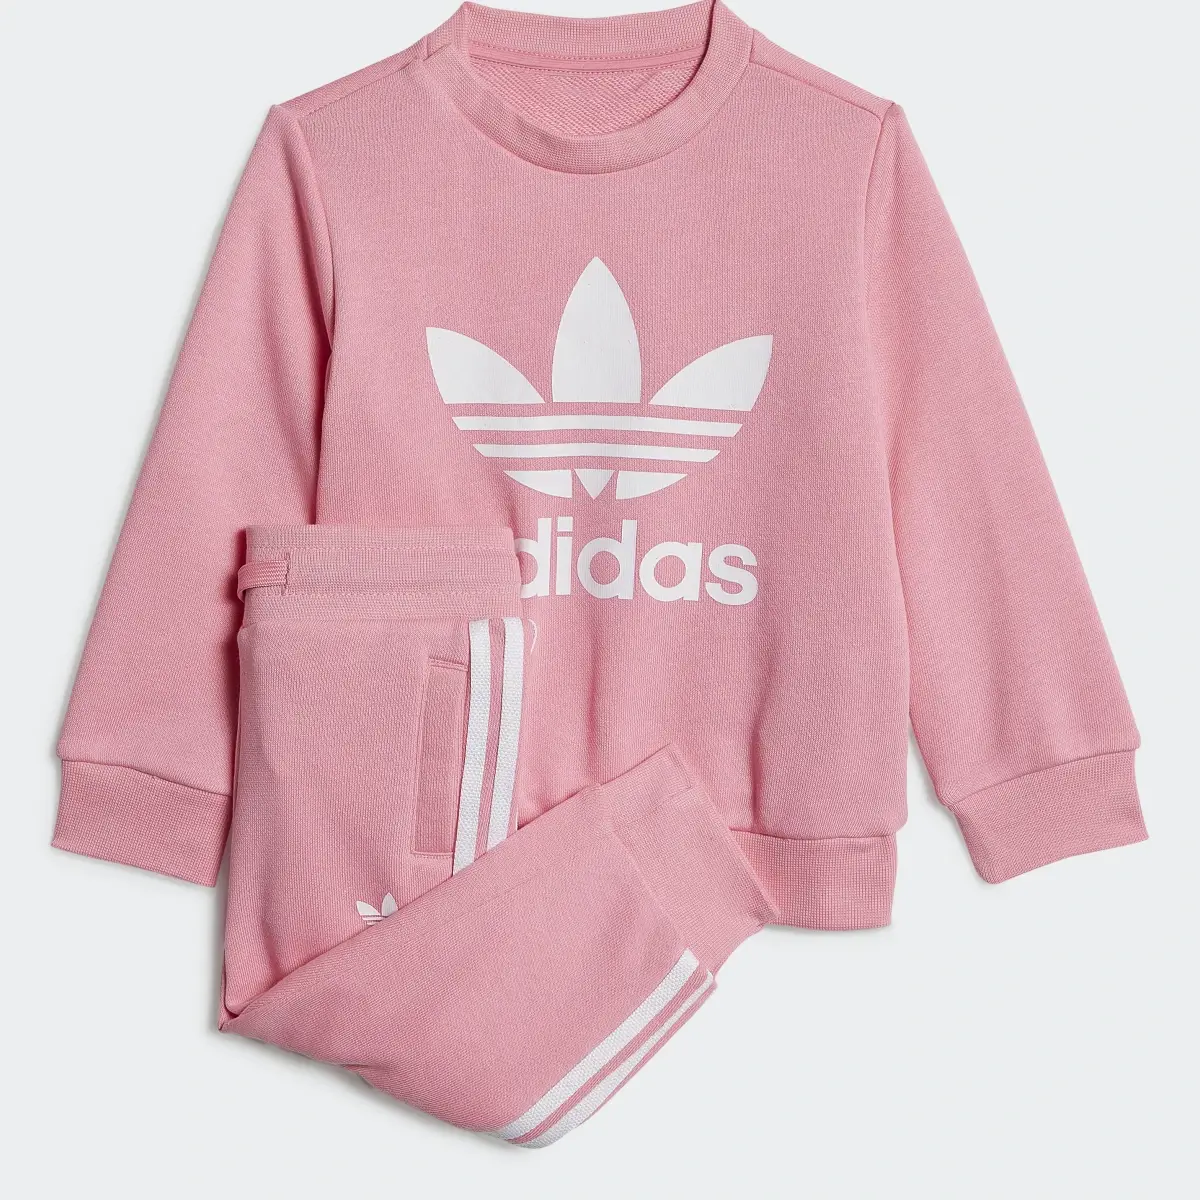 Adidas Crew Sweatshirt Set. 1